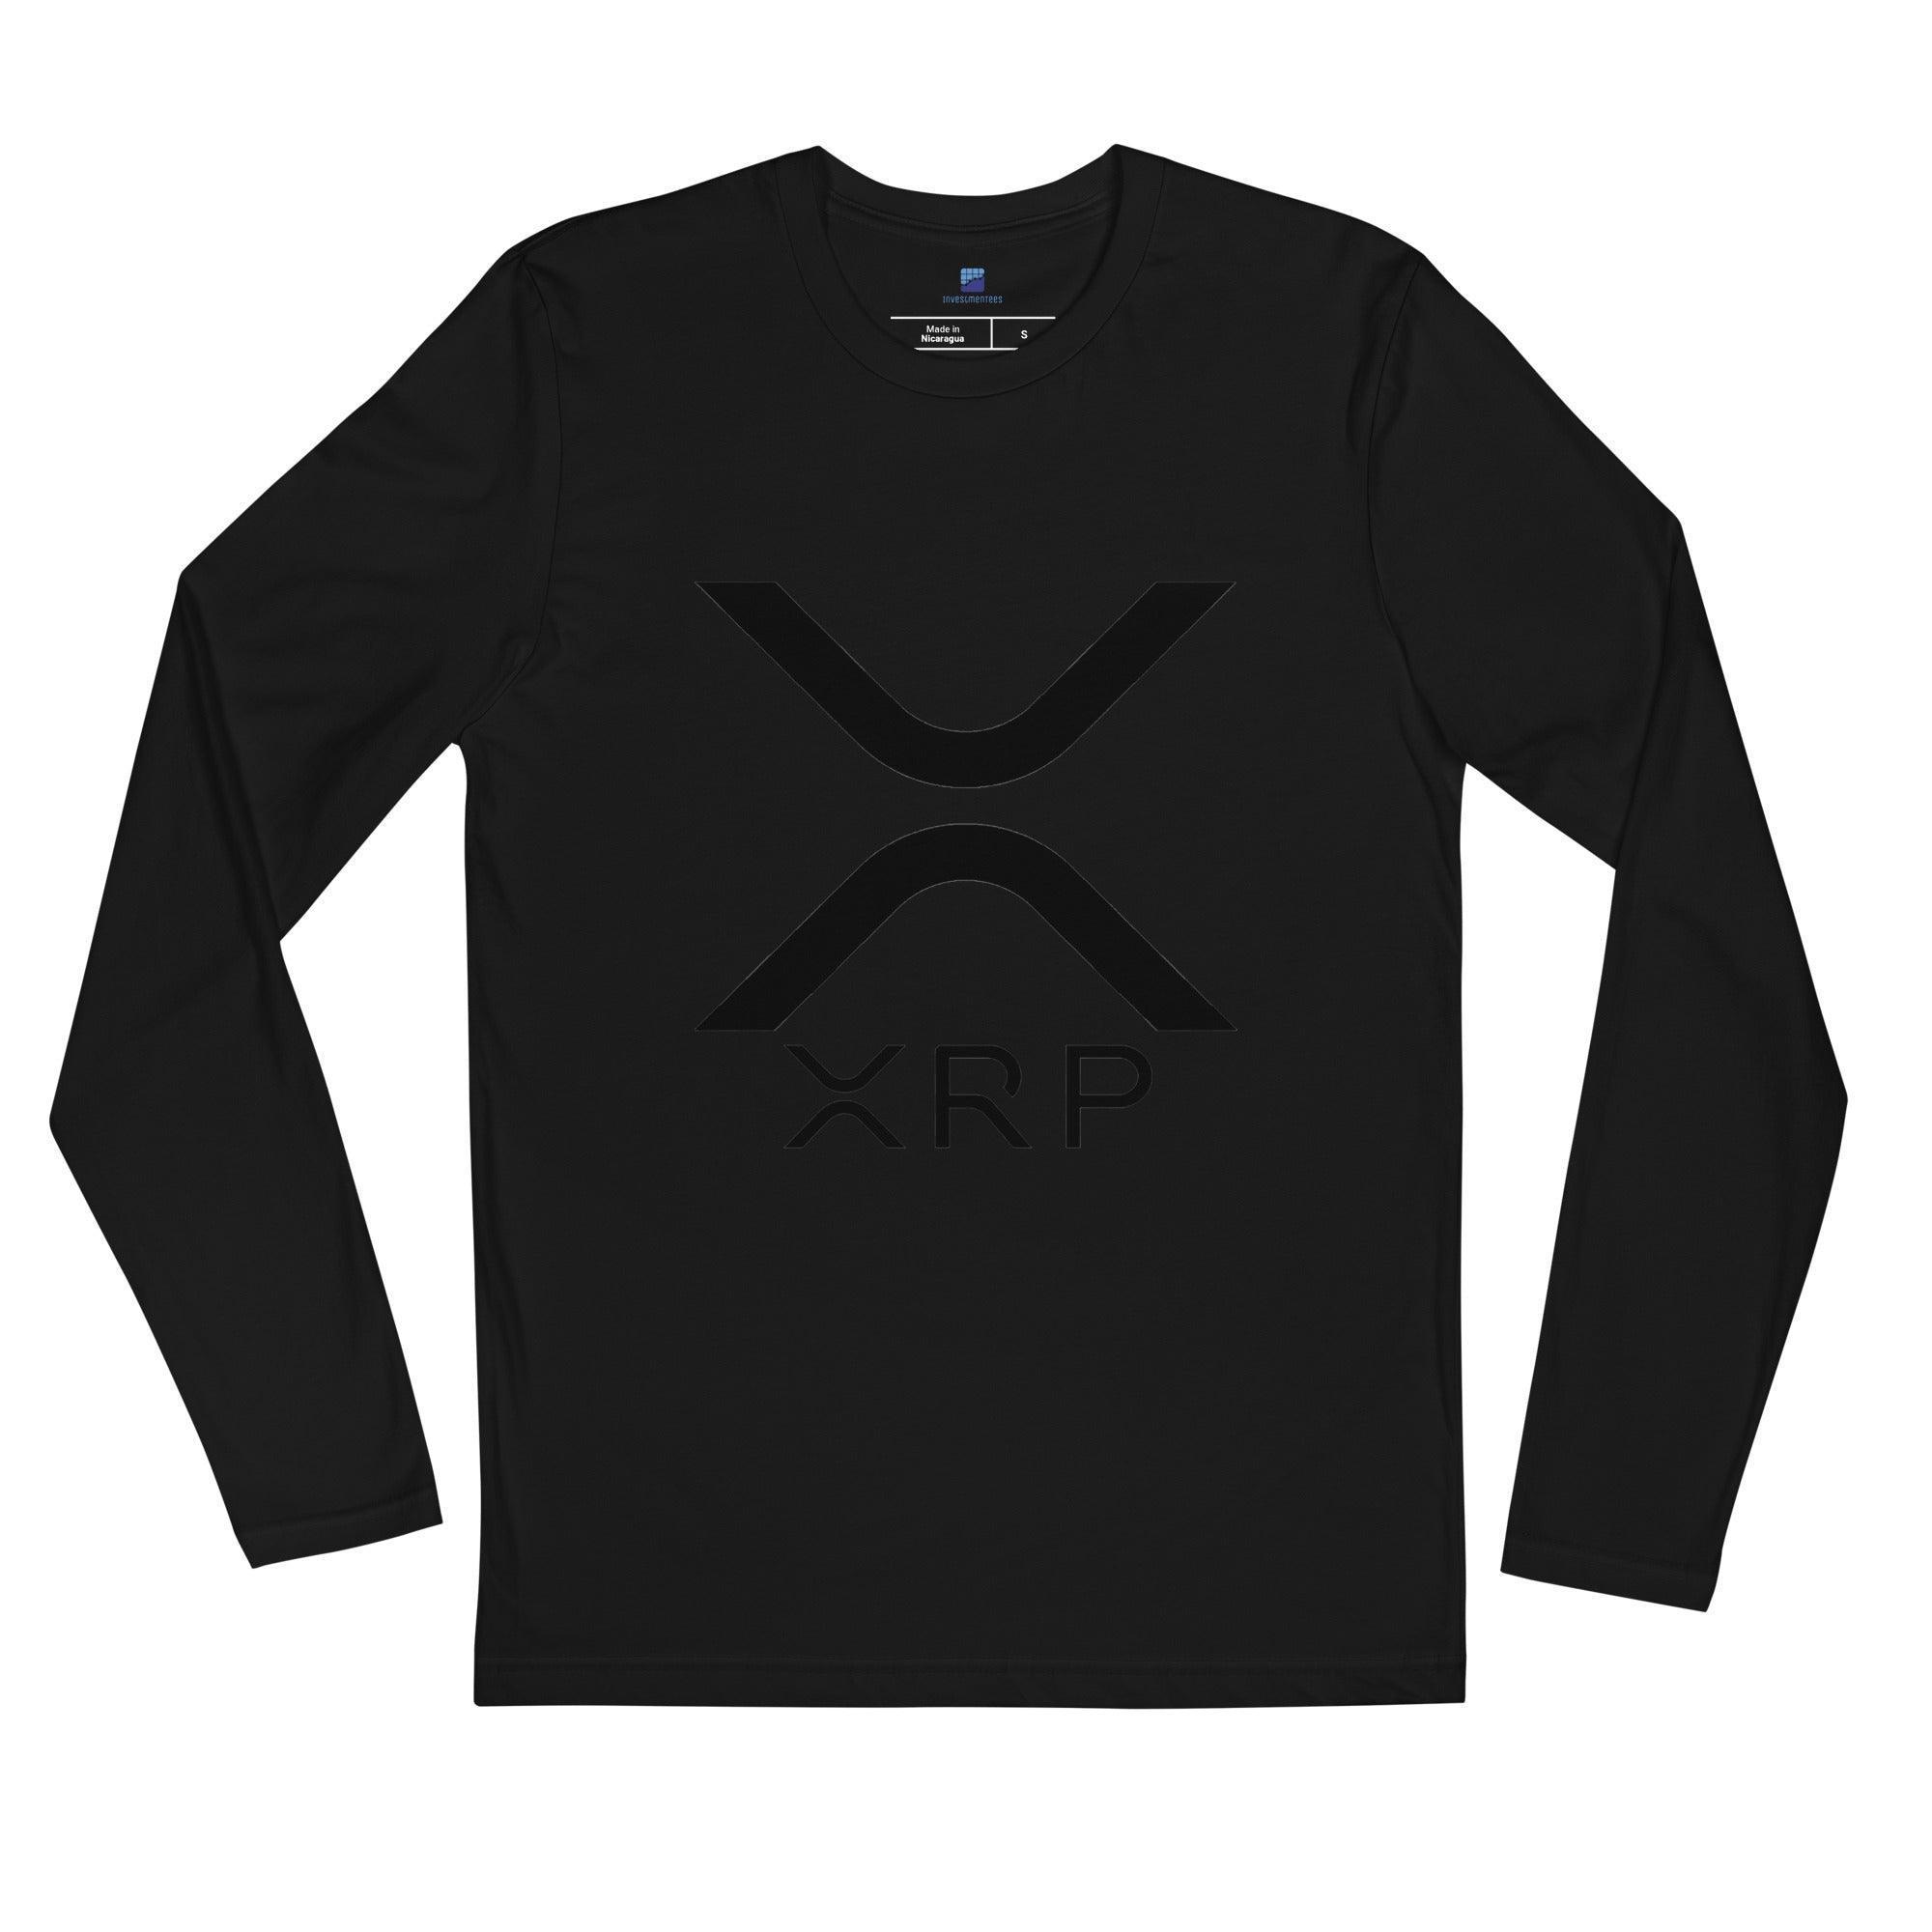 Ripple | XRP Long Sleeve T-Shirt - InvestmenTees